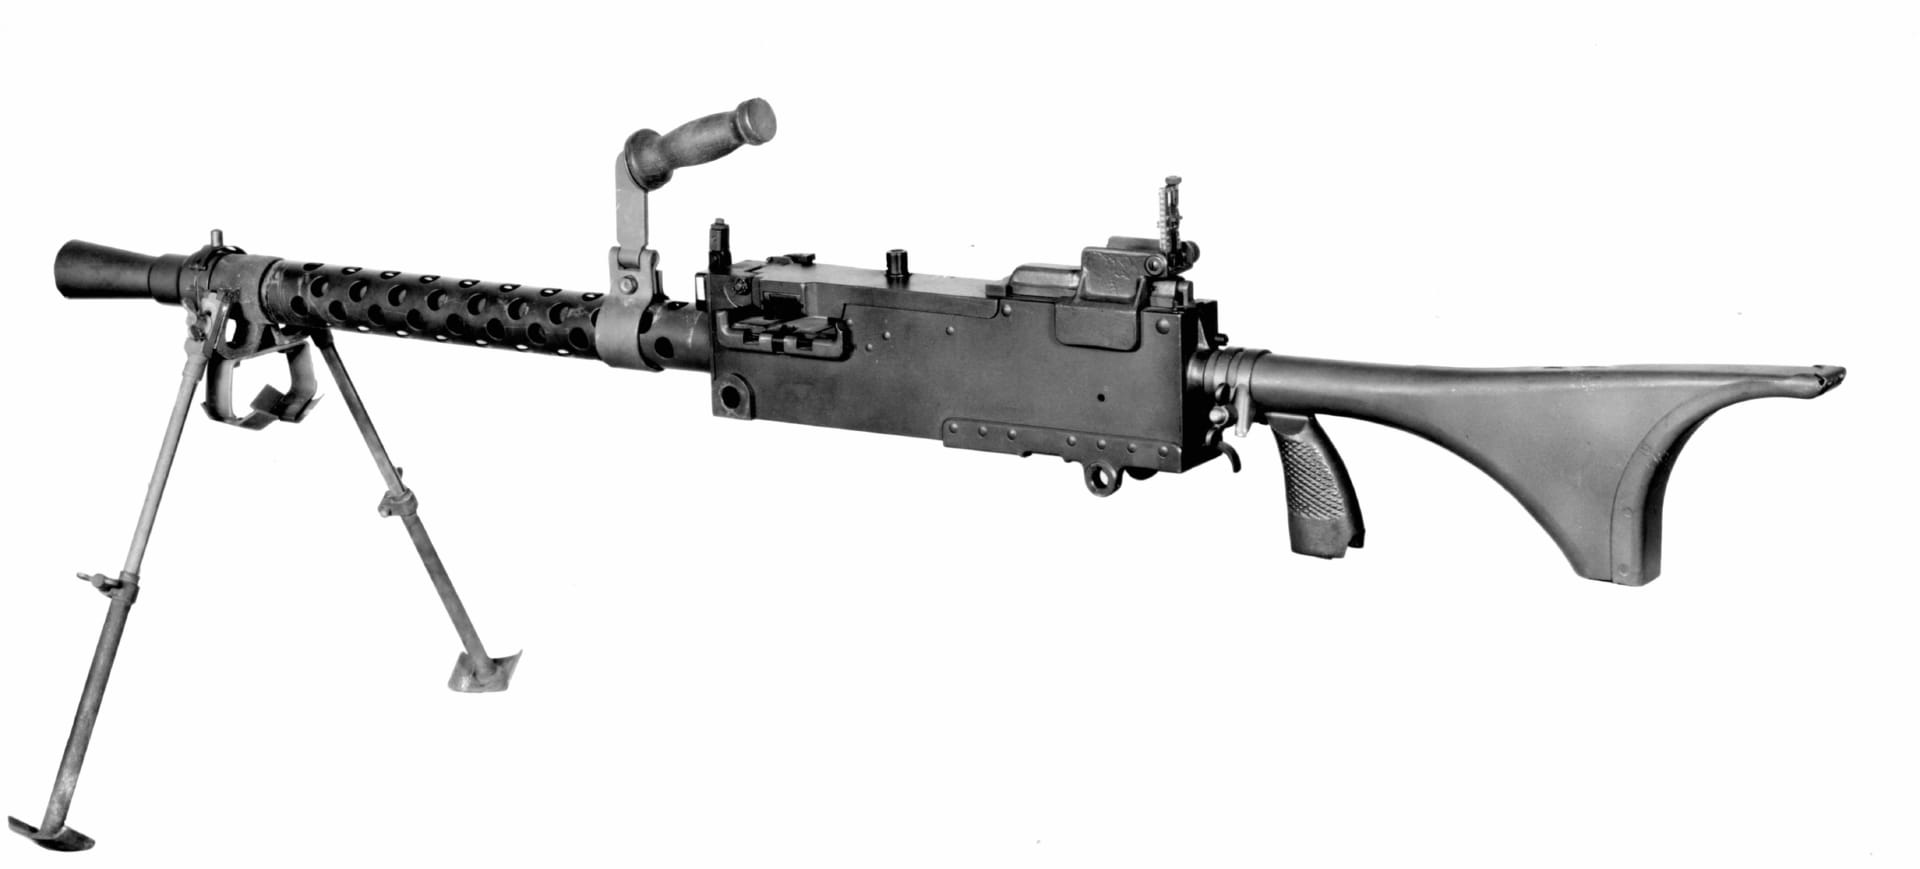 M1919 Browning machine gun at 1024 x 1024 iPad size wallpapers HD quality